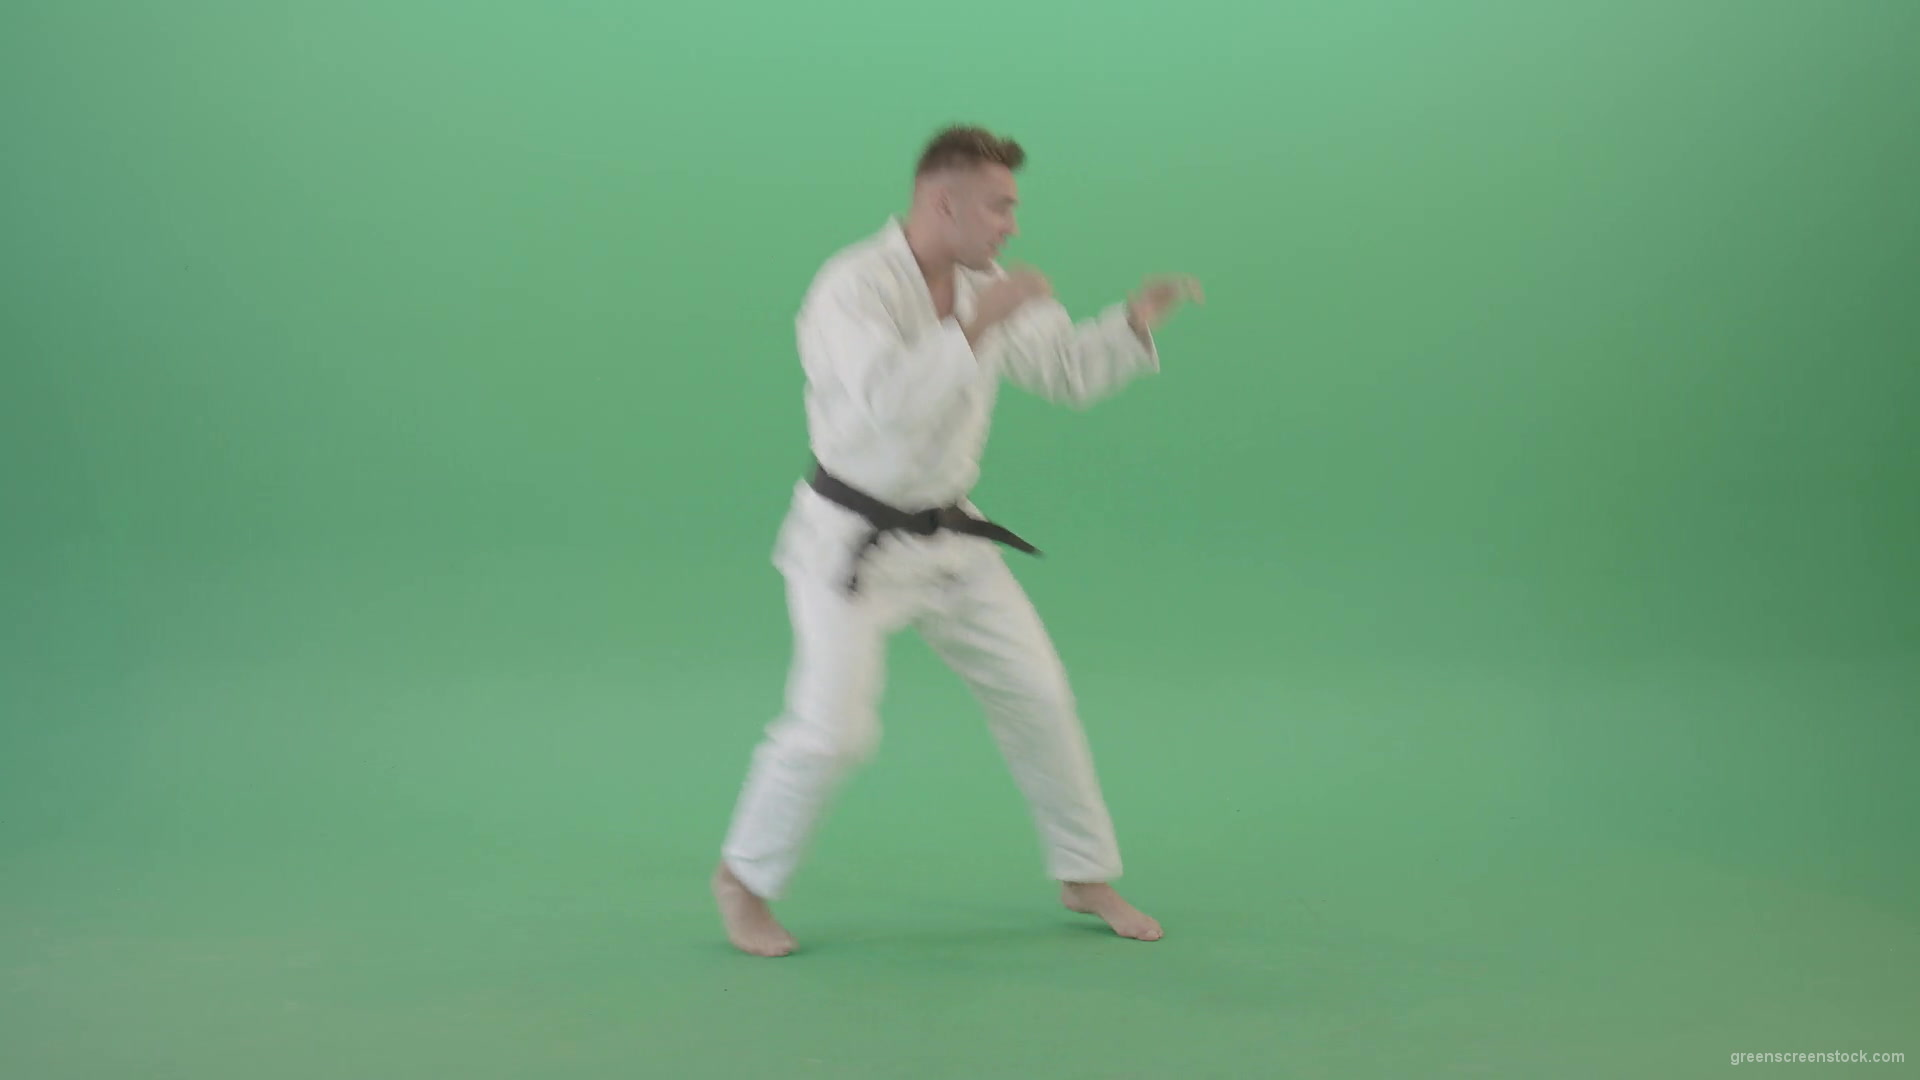 Jujutsu-Man-trianing-to-fight-combat-isolated-on-green-screen-1920_009 Green Screen Stock